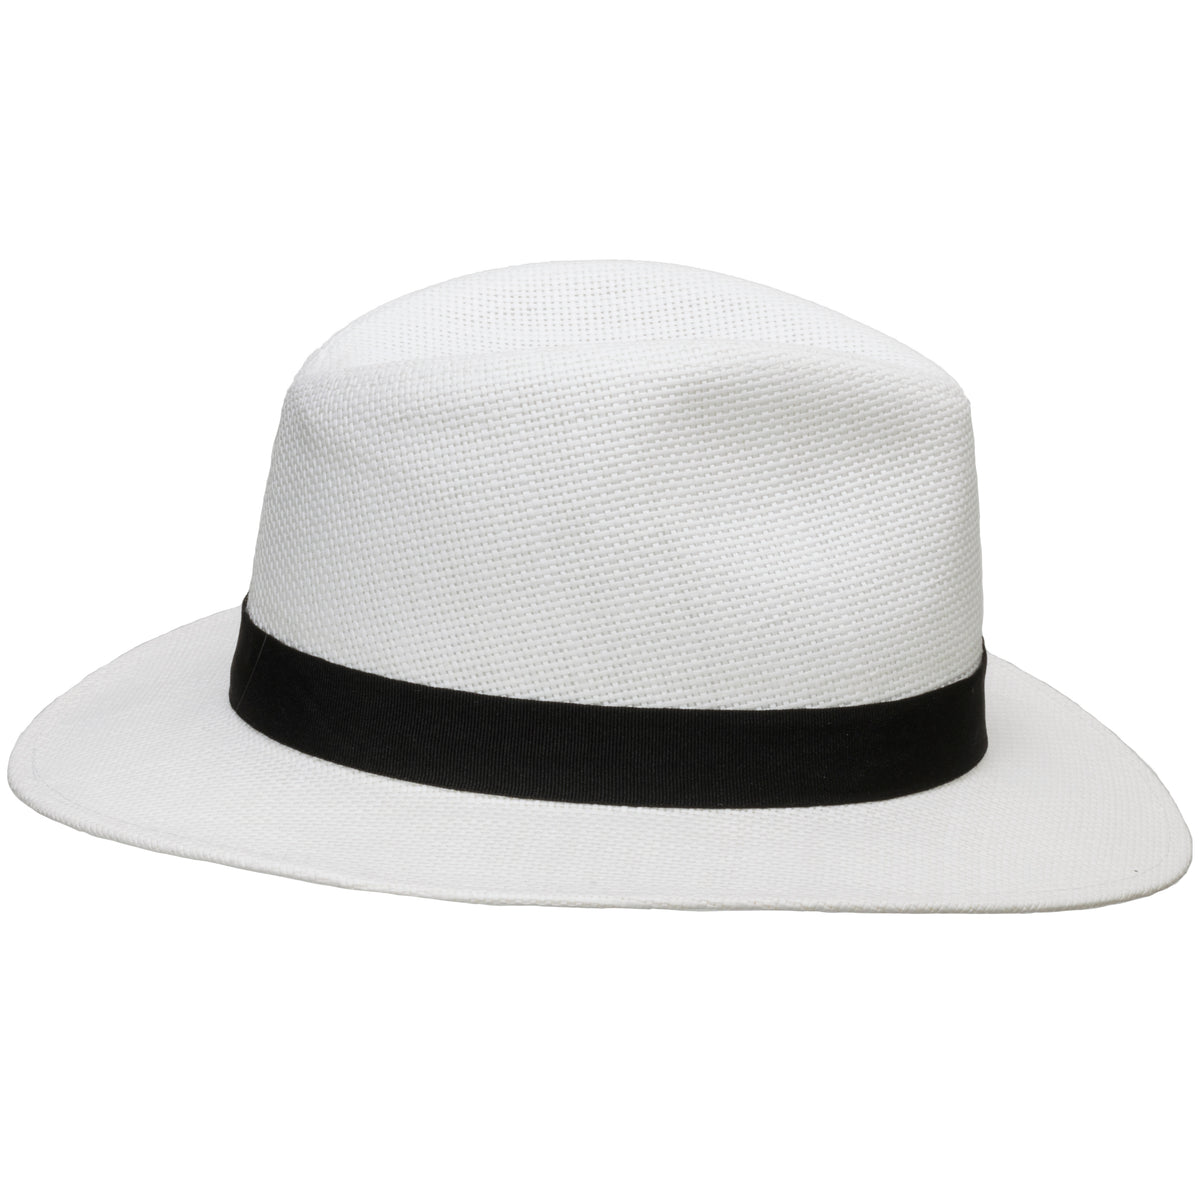 Trilby Fedora White with Black Hatband / 7 5/8